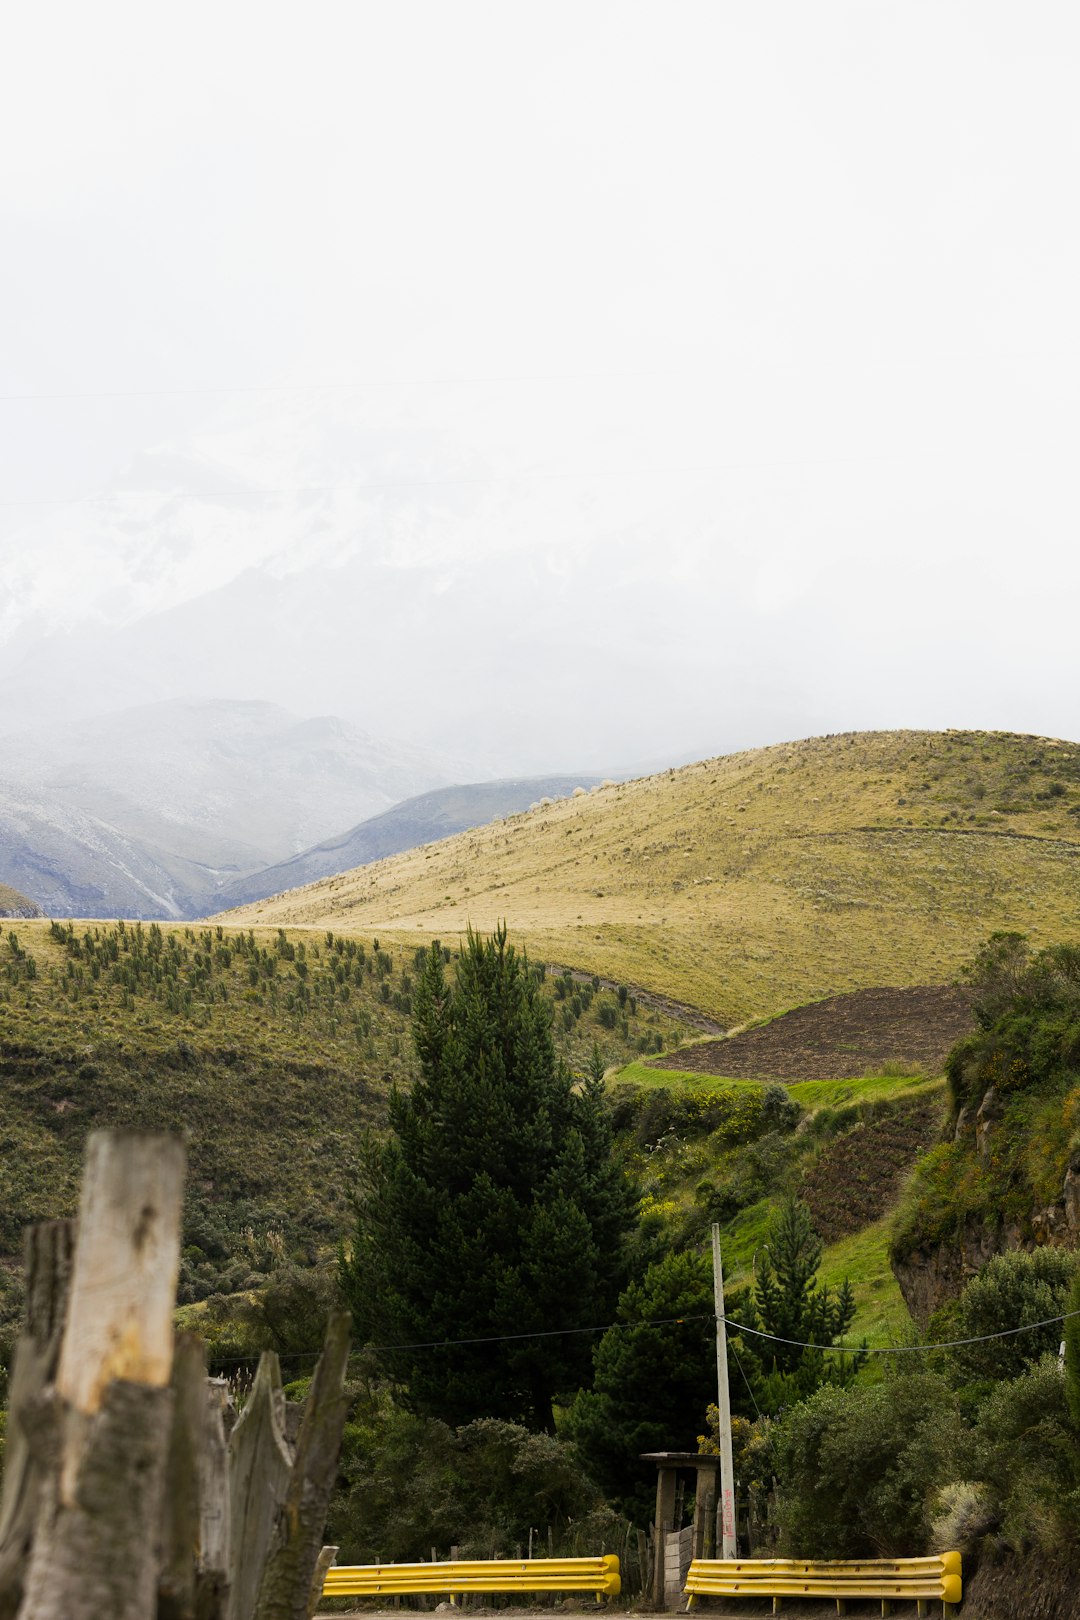 Travel Tips and Stories of Chimborazo in Ecuador